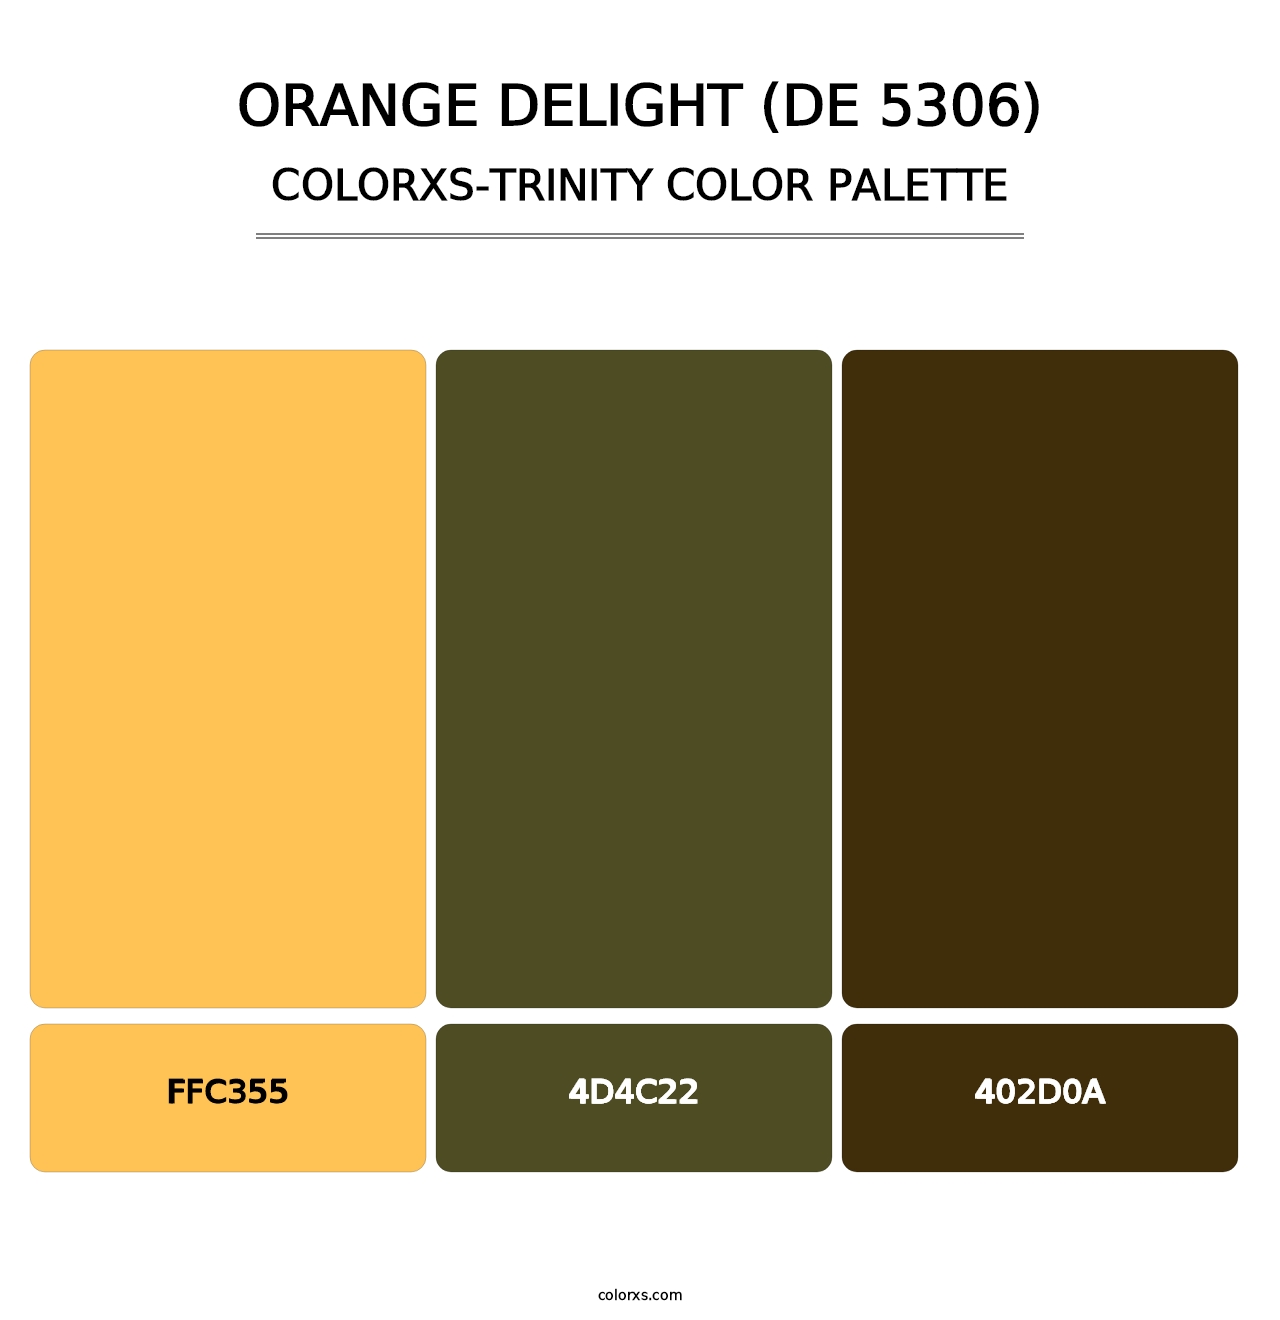 Orange Delight (DE 5306) - Colorxs Trinity Palette